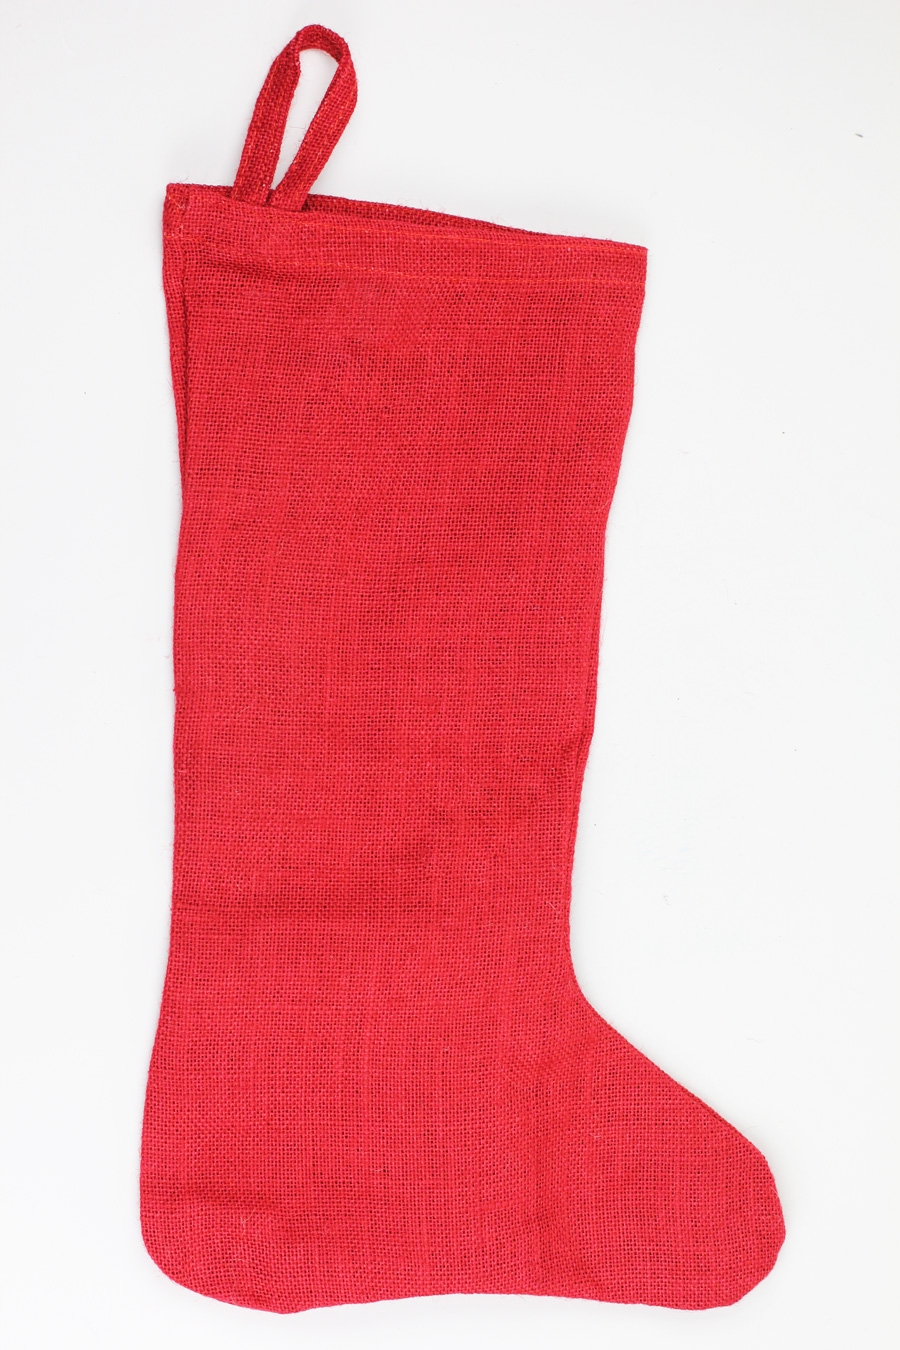 11" x 19" Red Burlap Stocking - Click Image to Close